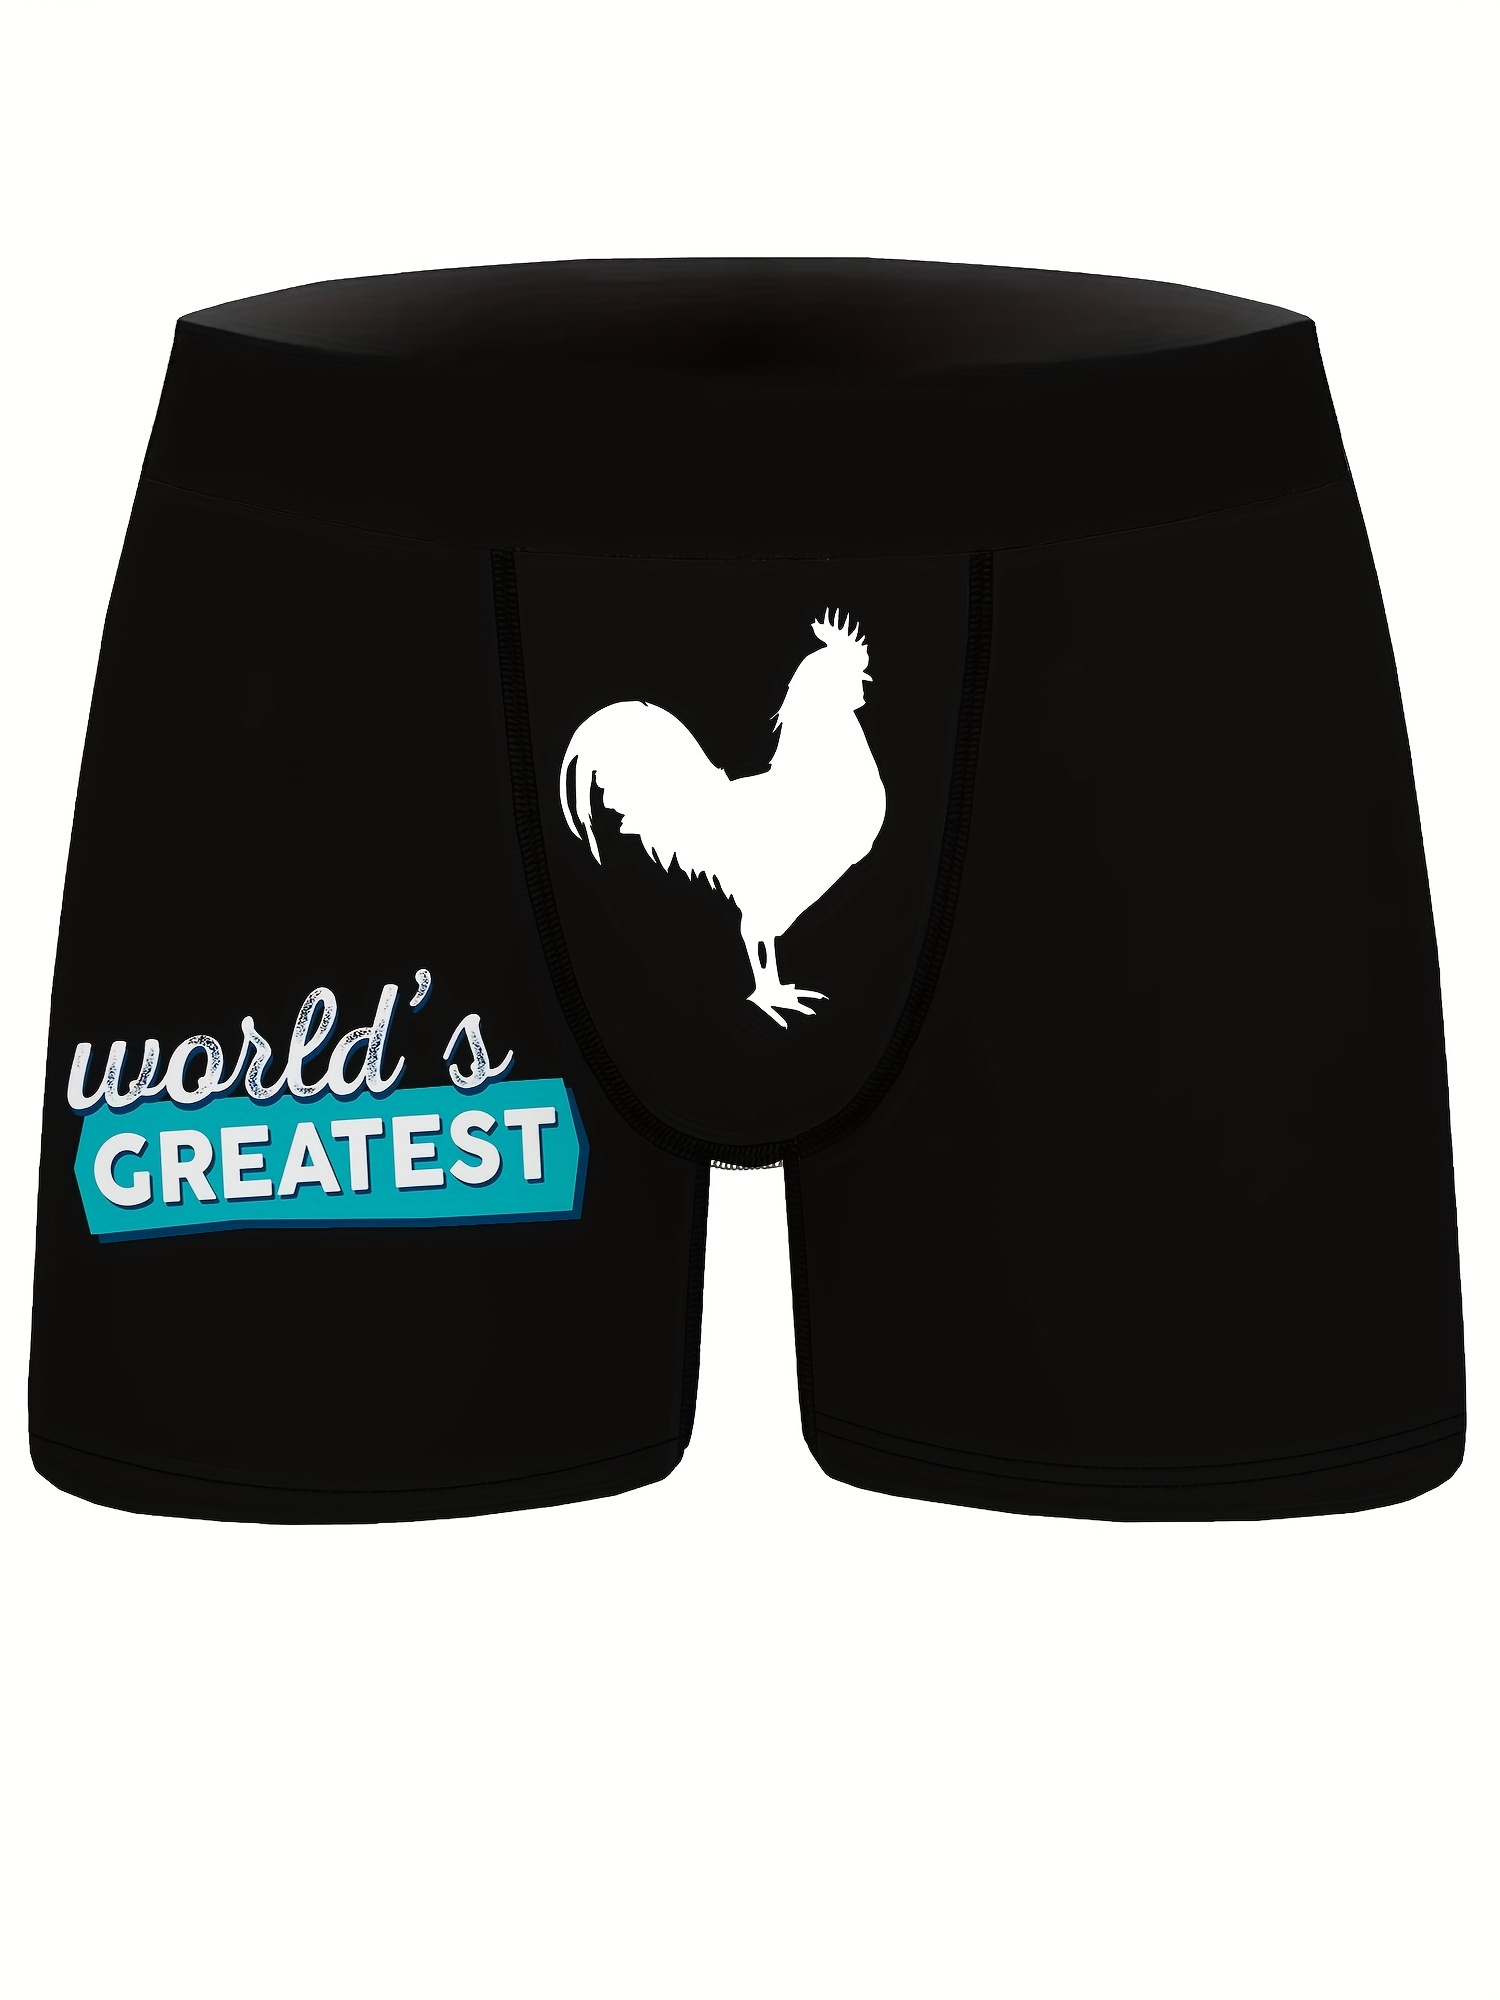 Men's Boxer Shorts Big Rooster / Big Cock Funny Boxers Underwear